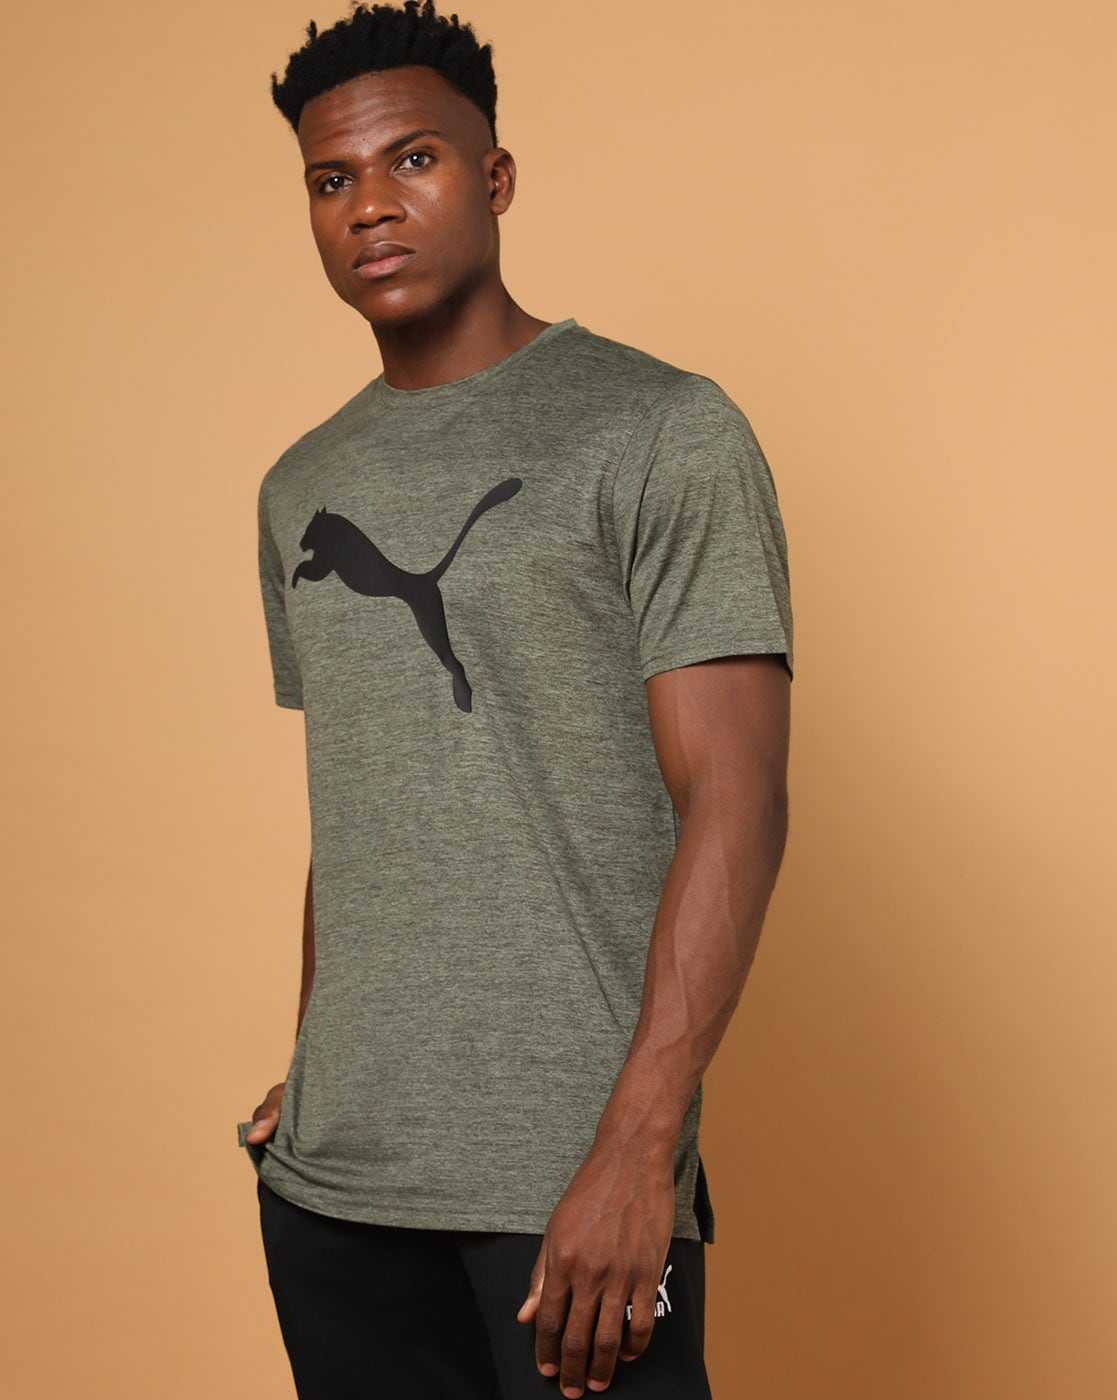 Men for Buy Puma by Tshirts Green Online